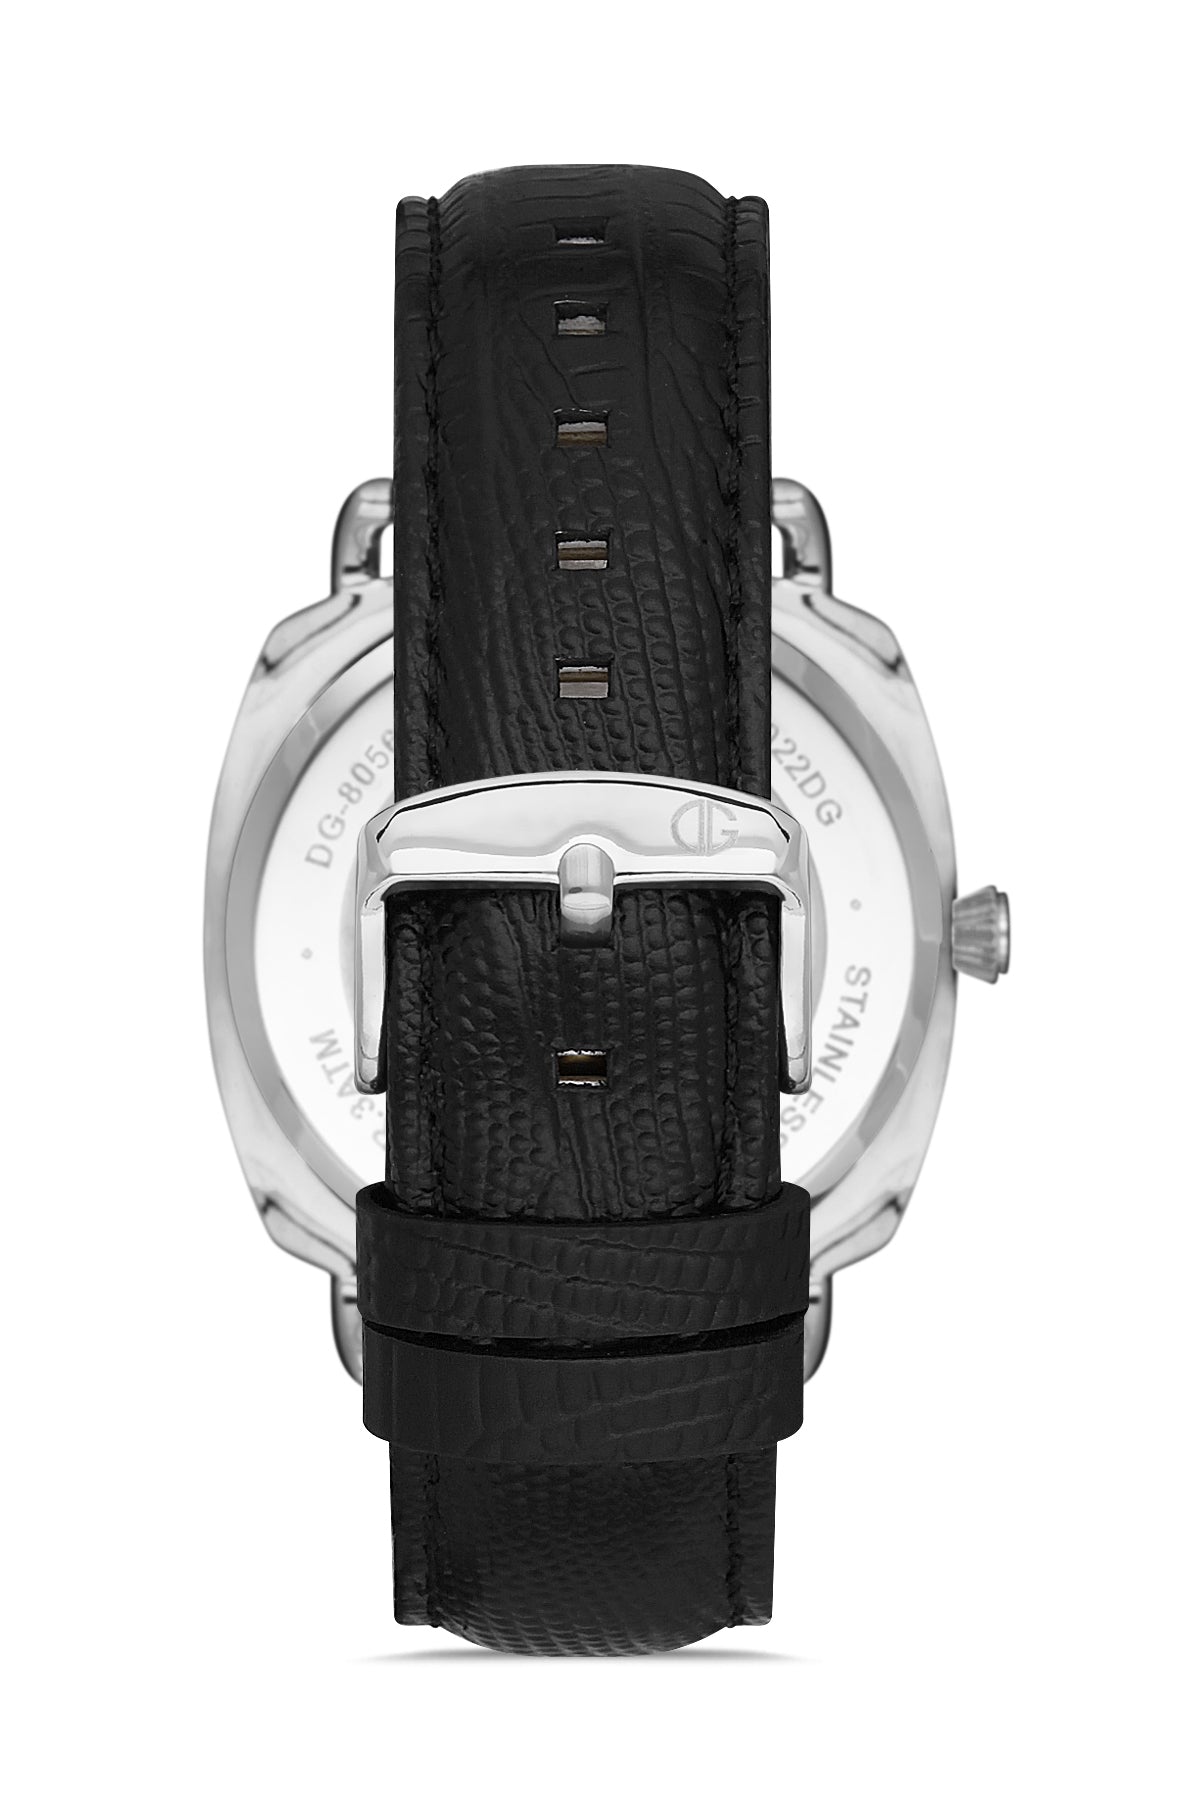 DAVID GUNER Black Dial Silver Plated Men's Wristwatch